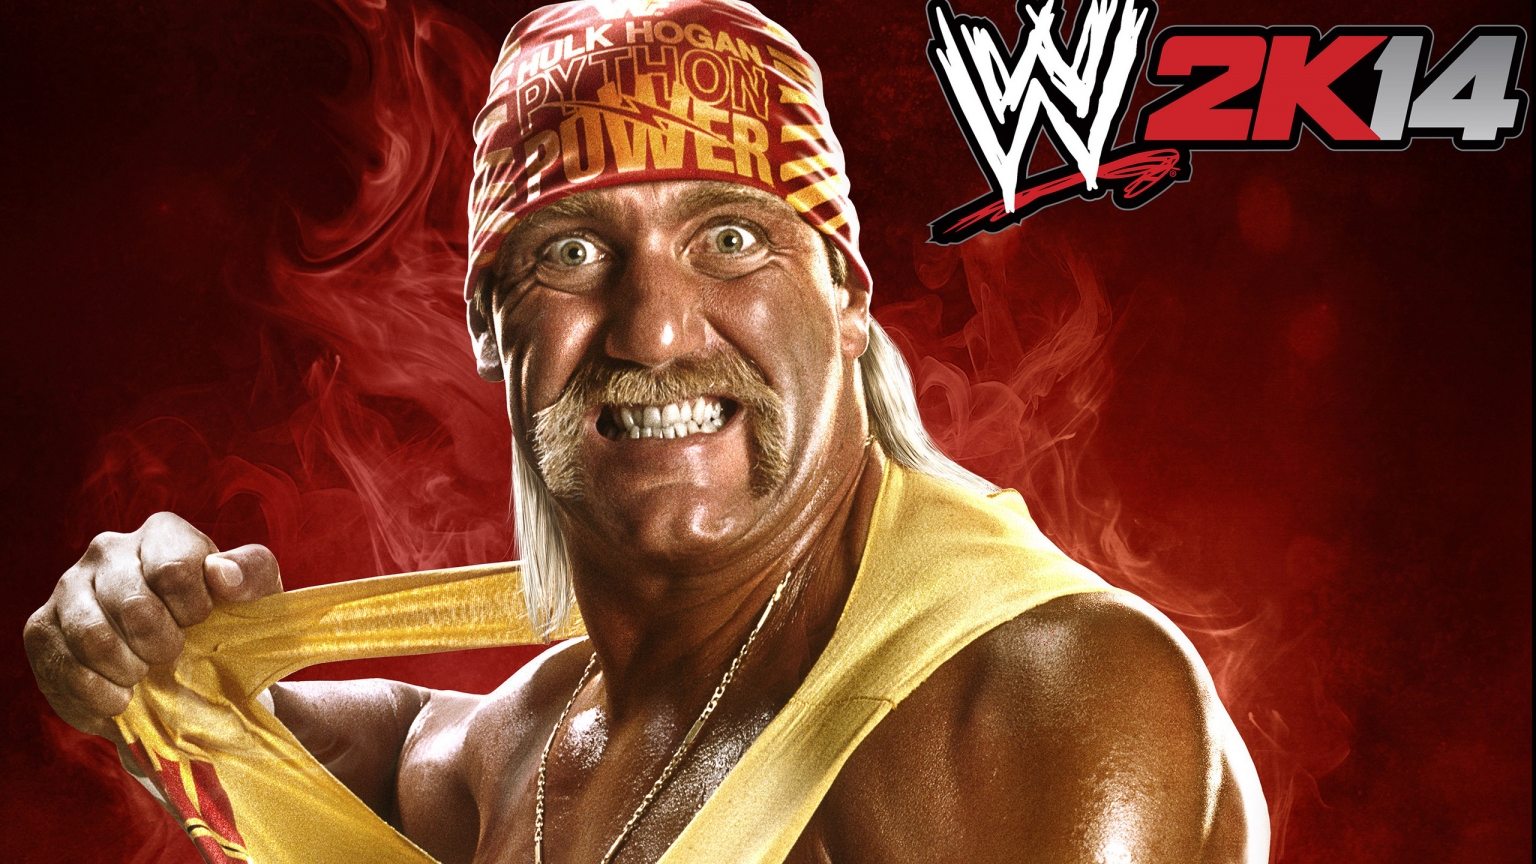 Hulk Hogan WWE2K14 for 1536 x 864 HDTV resolution